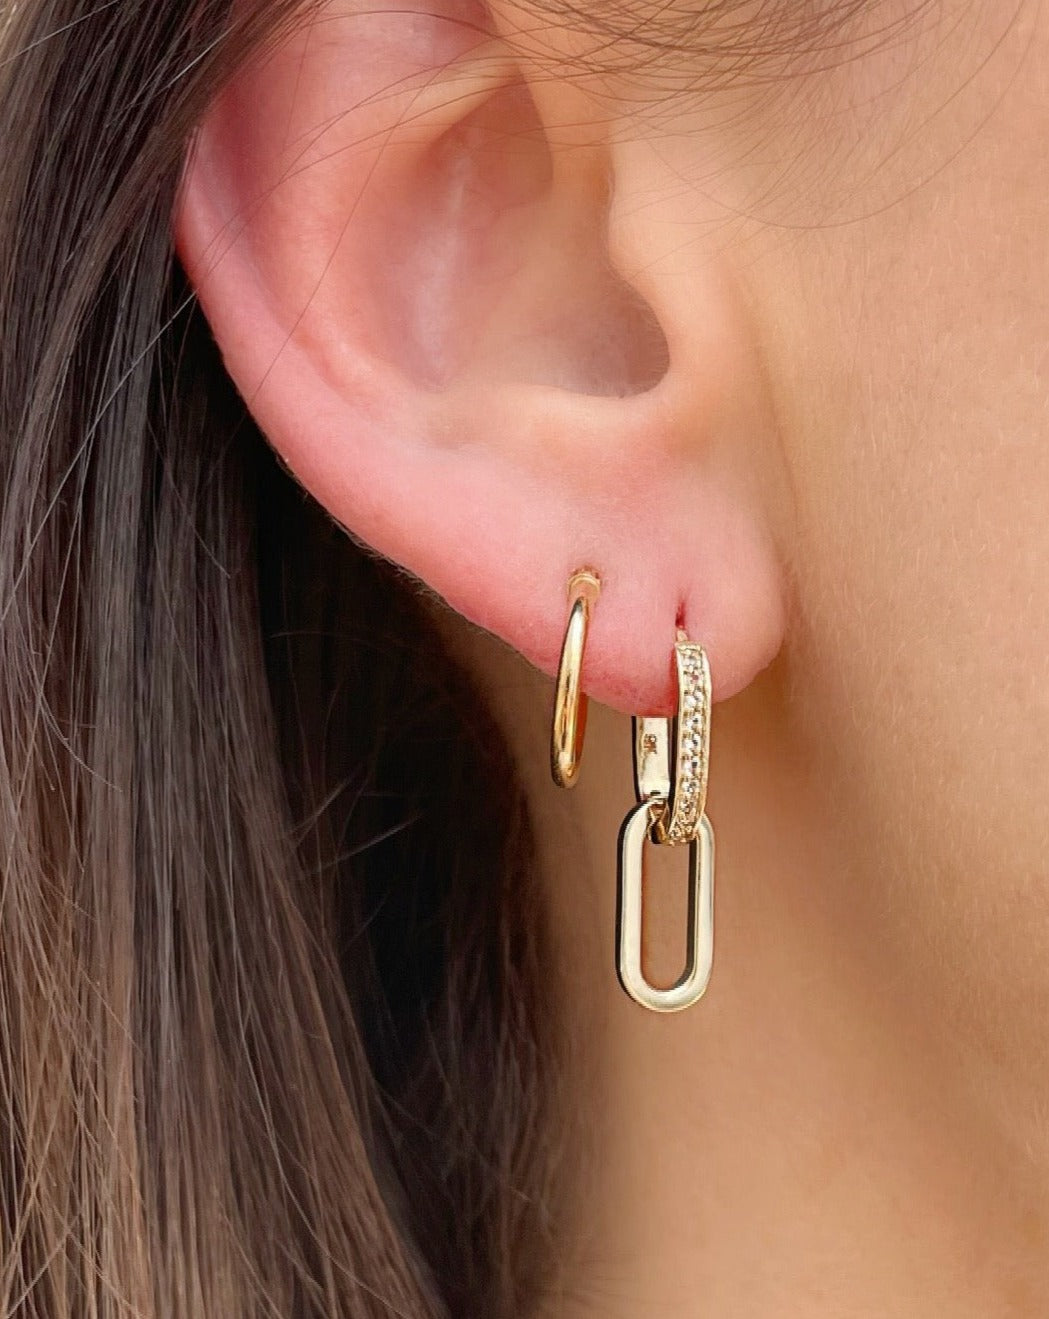 Gold and sapphire hoop earrings on female ear